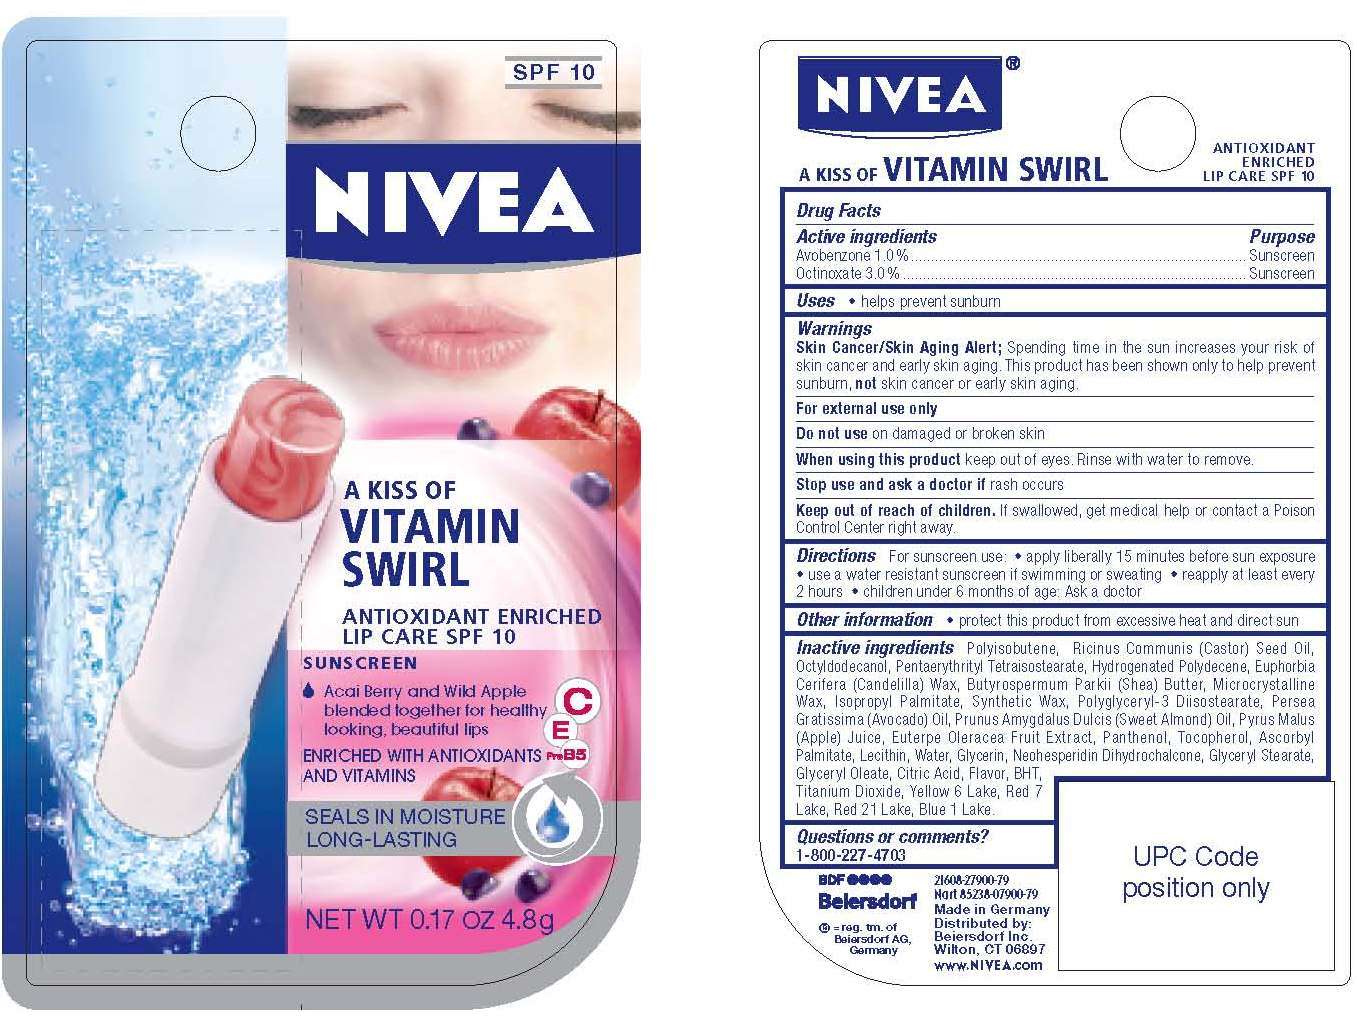 Nivea A Kiss of Vitamin Swirl Antioxidant Enriched Lip Care